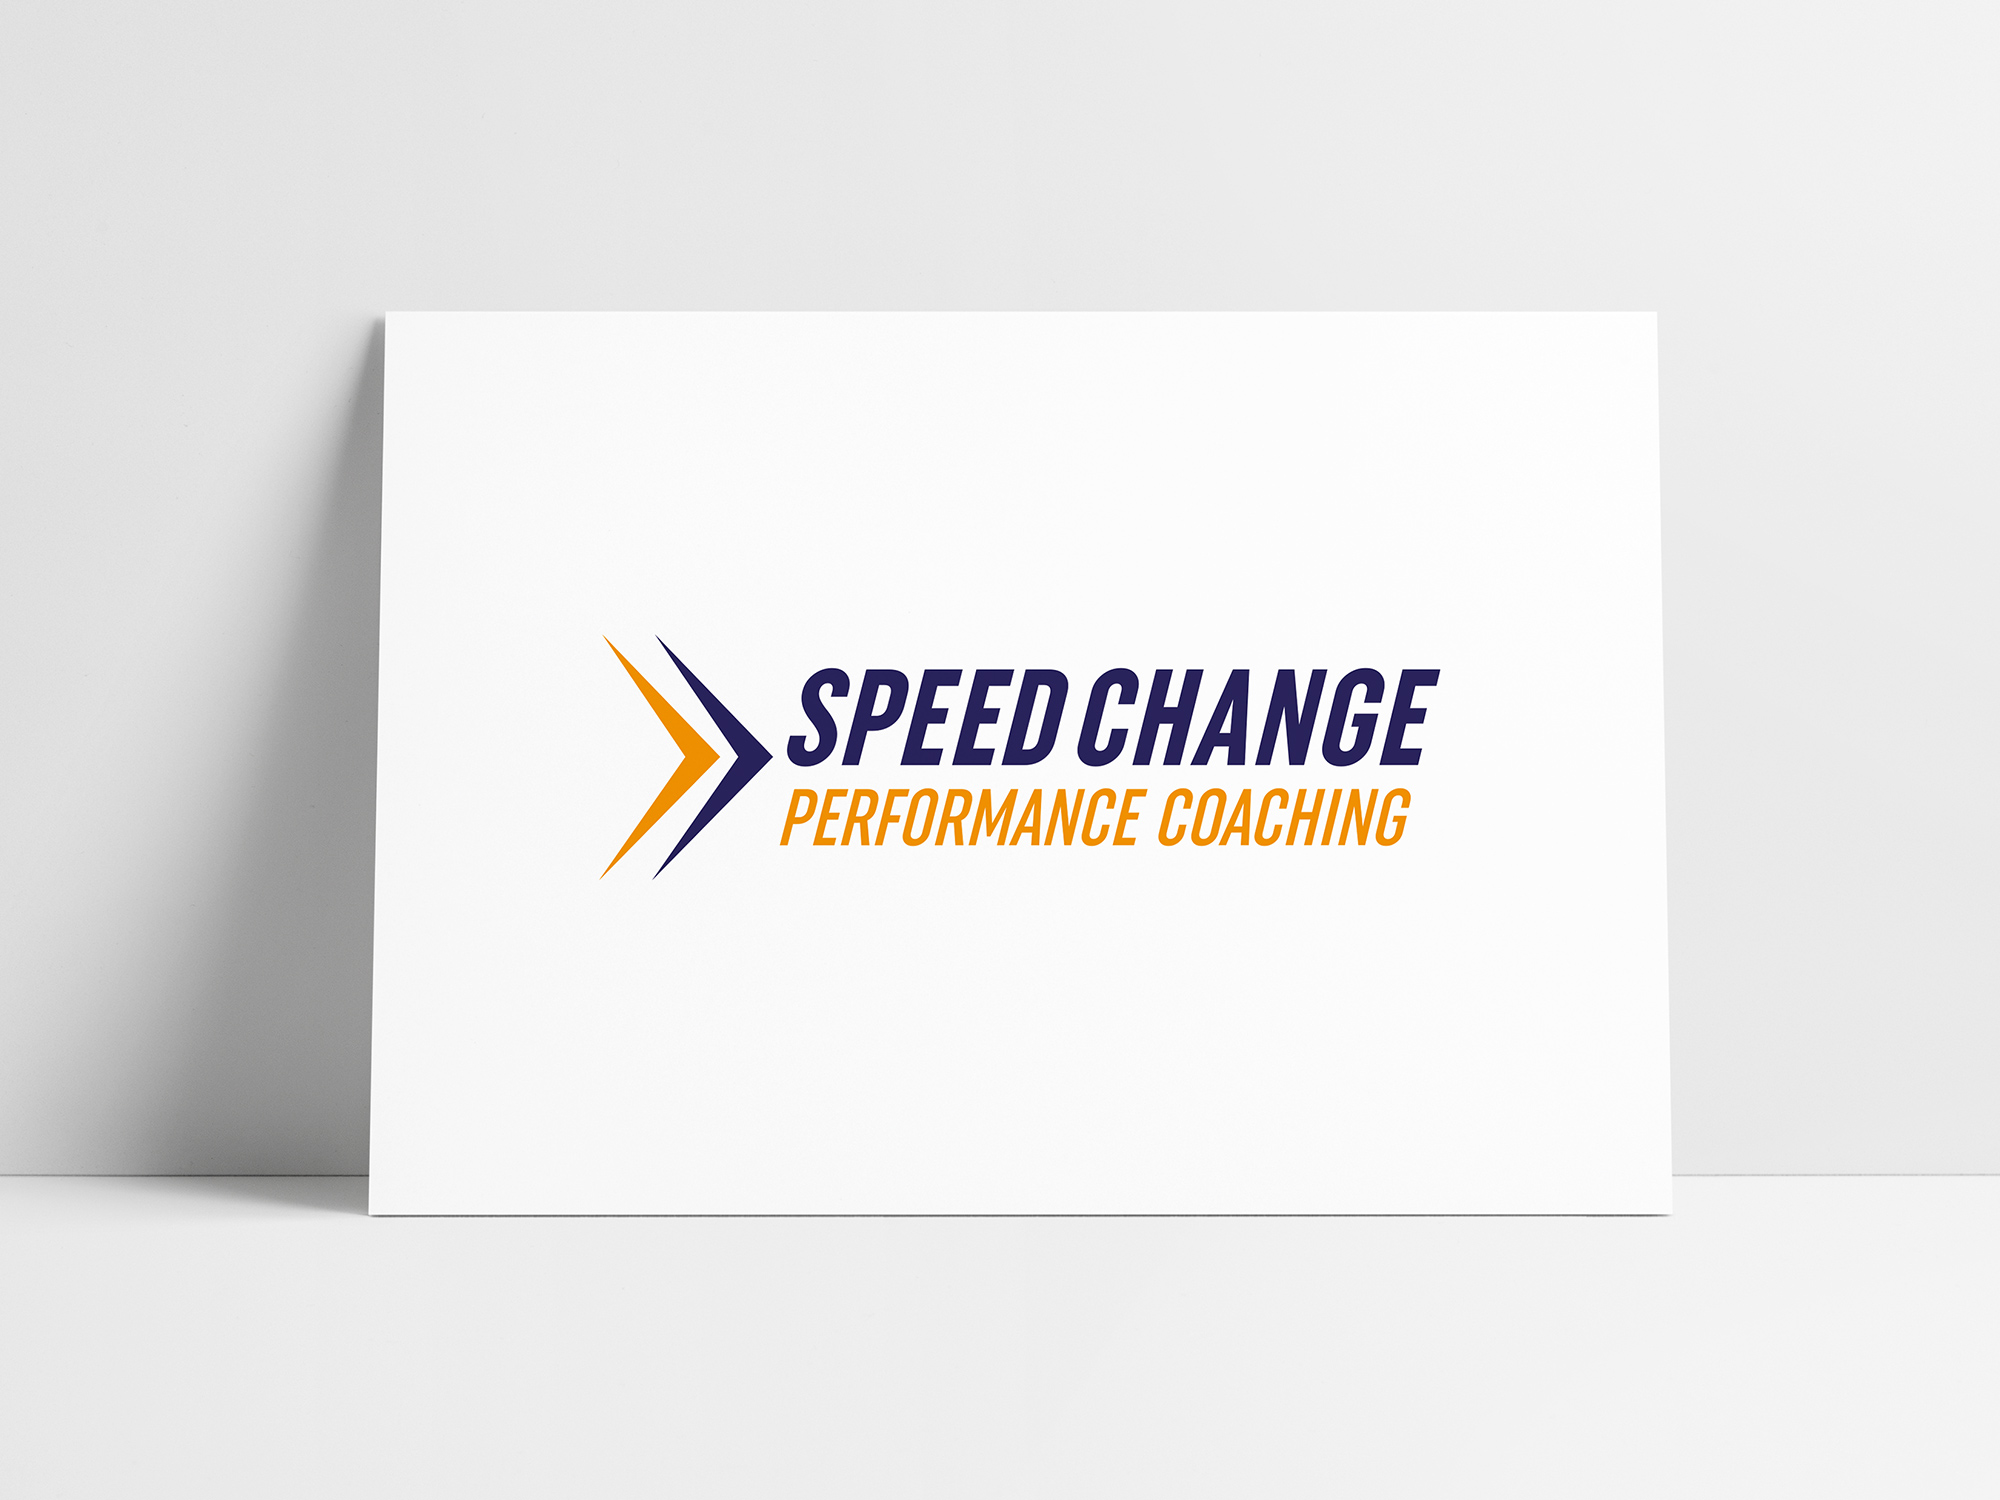 SpeedChange Performance Coaching